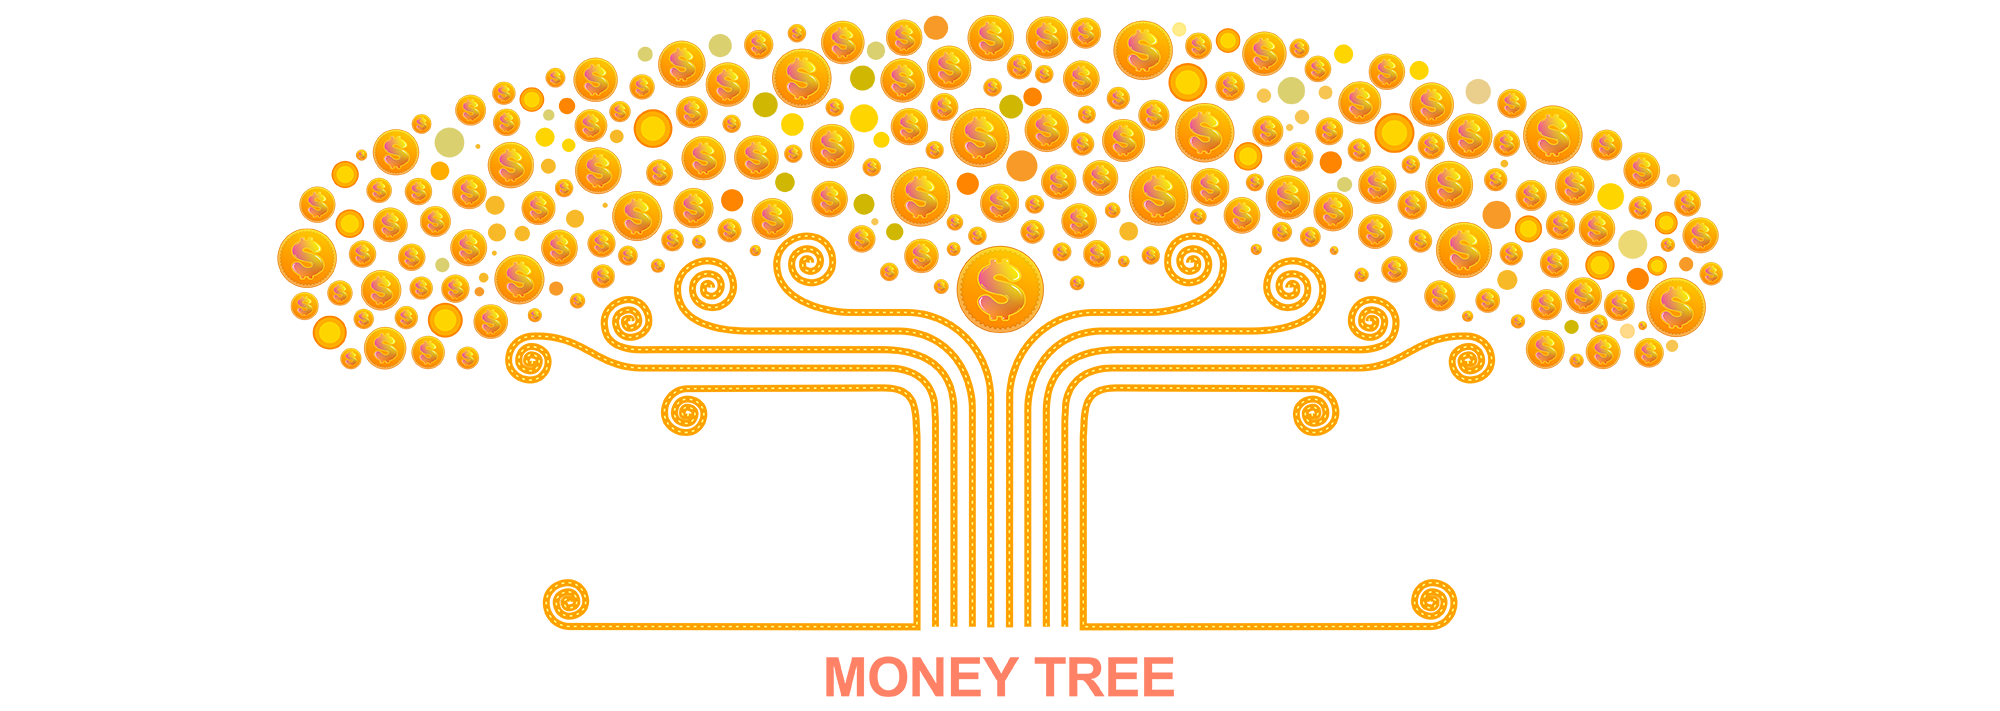 игра tree for money как вывести деньги